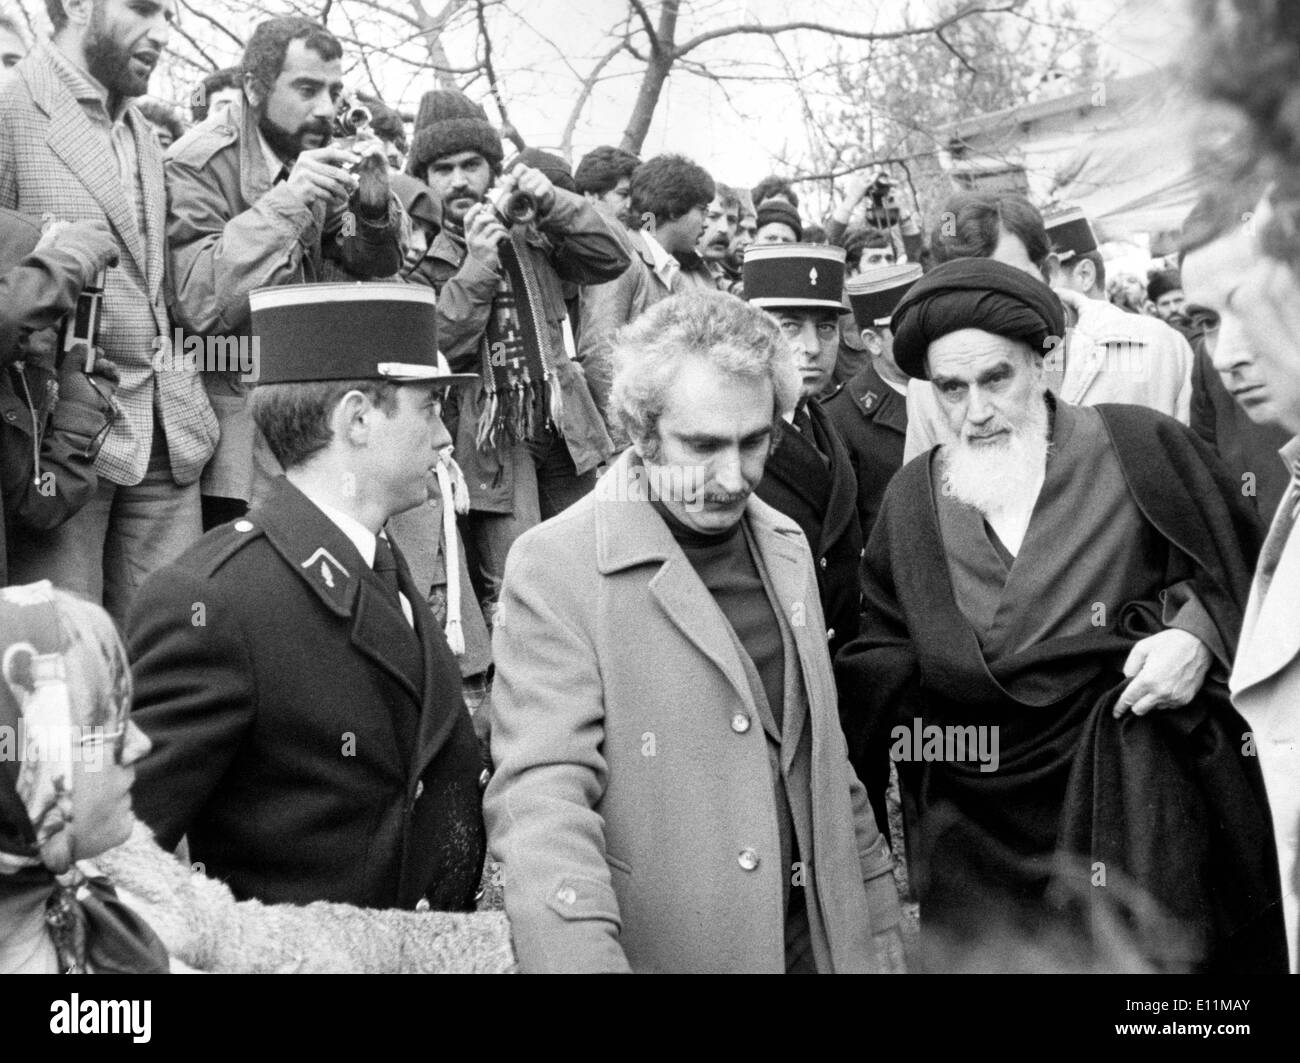 5527614 (900326) Ayatollah KHOMEINI (24.09.1902 - 03.06.1989, Ruhollah Mussawi HENDI) Iranischer Religionsf Hrer Und Politiker, Stockfoto